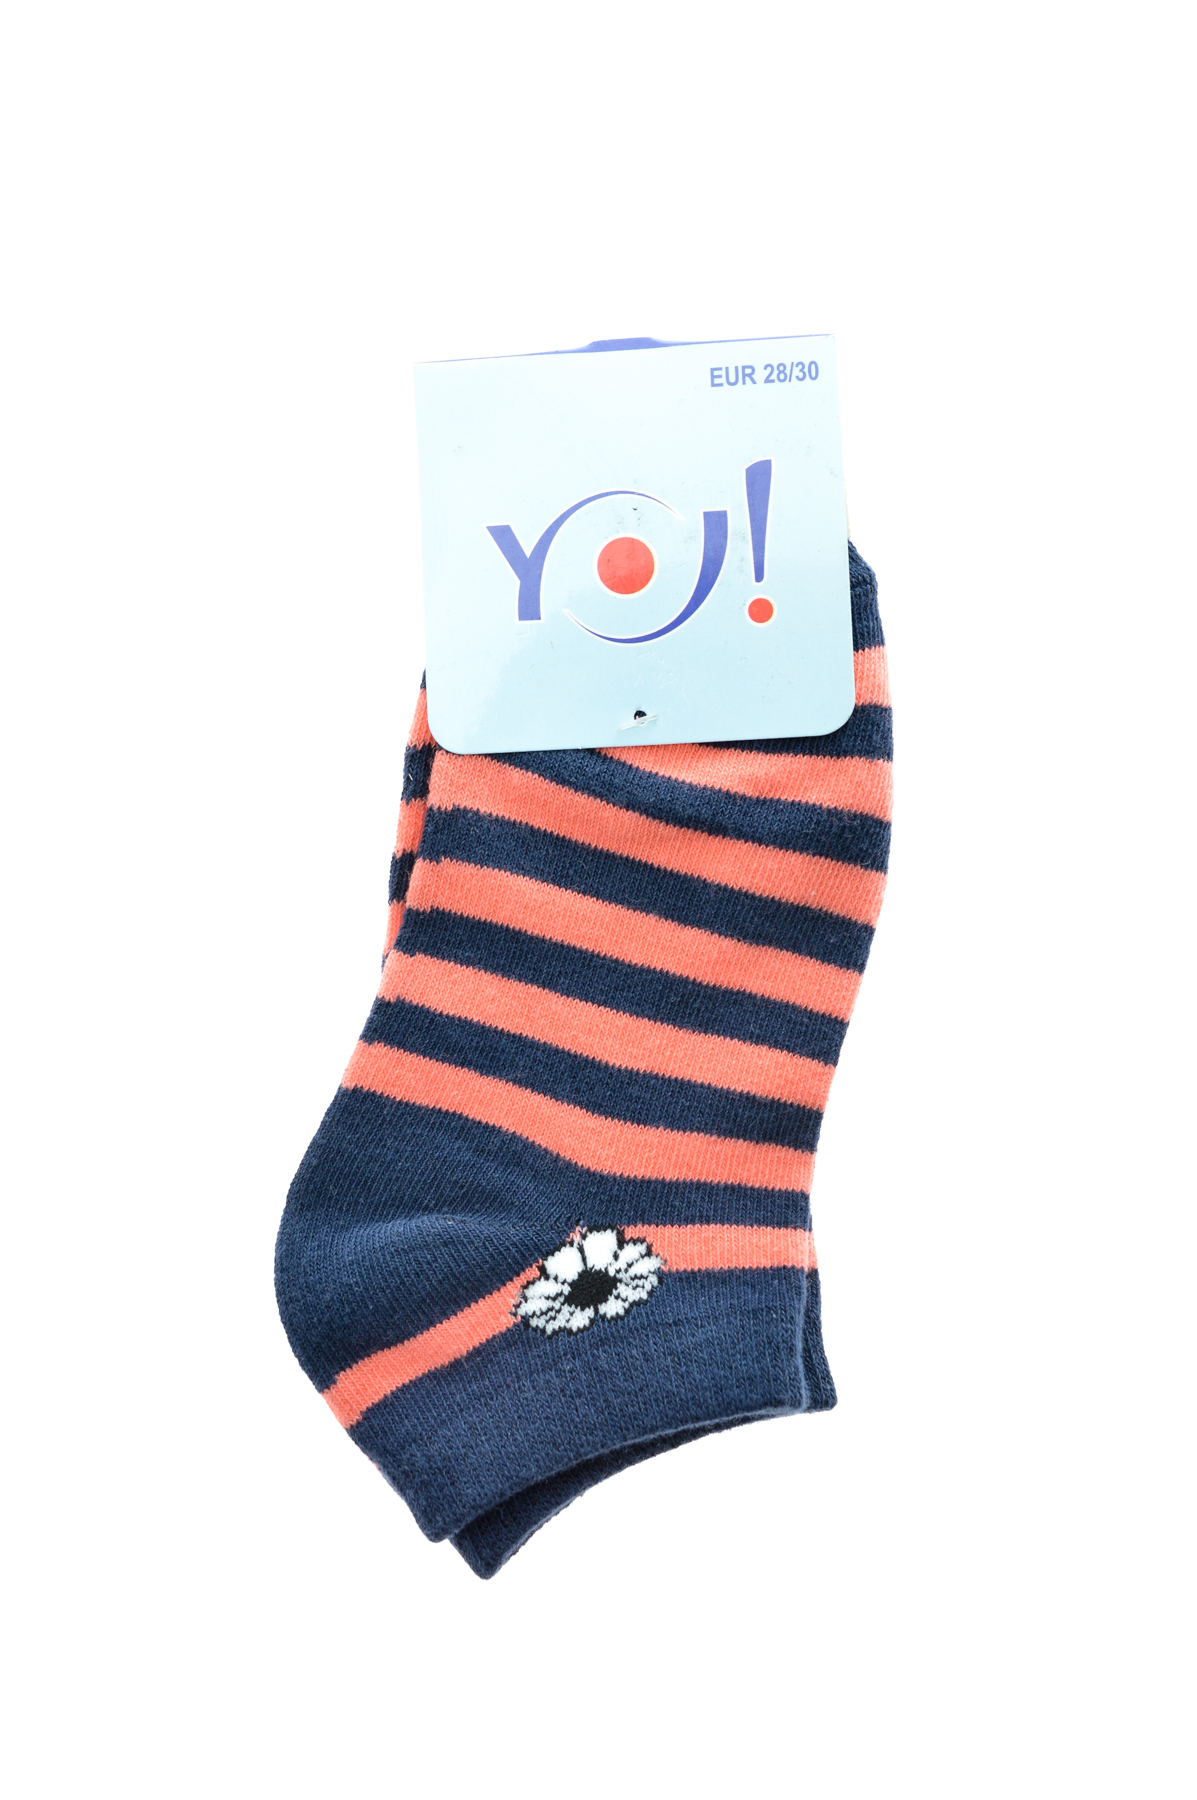 Kids' Socks - YO! club - 1